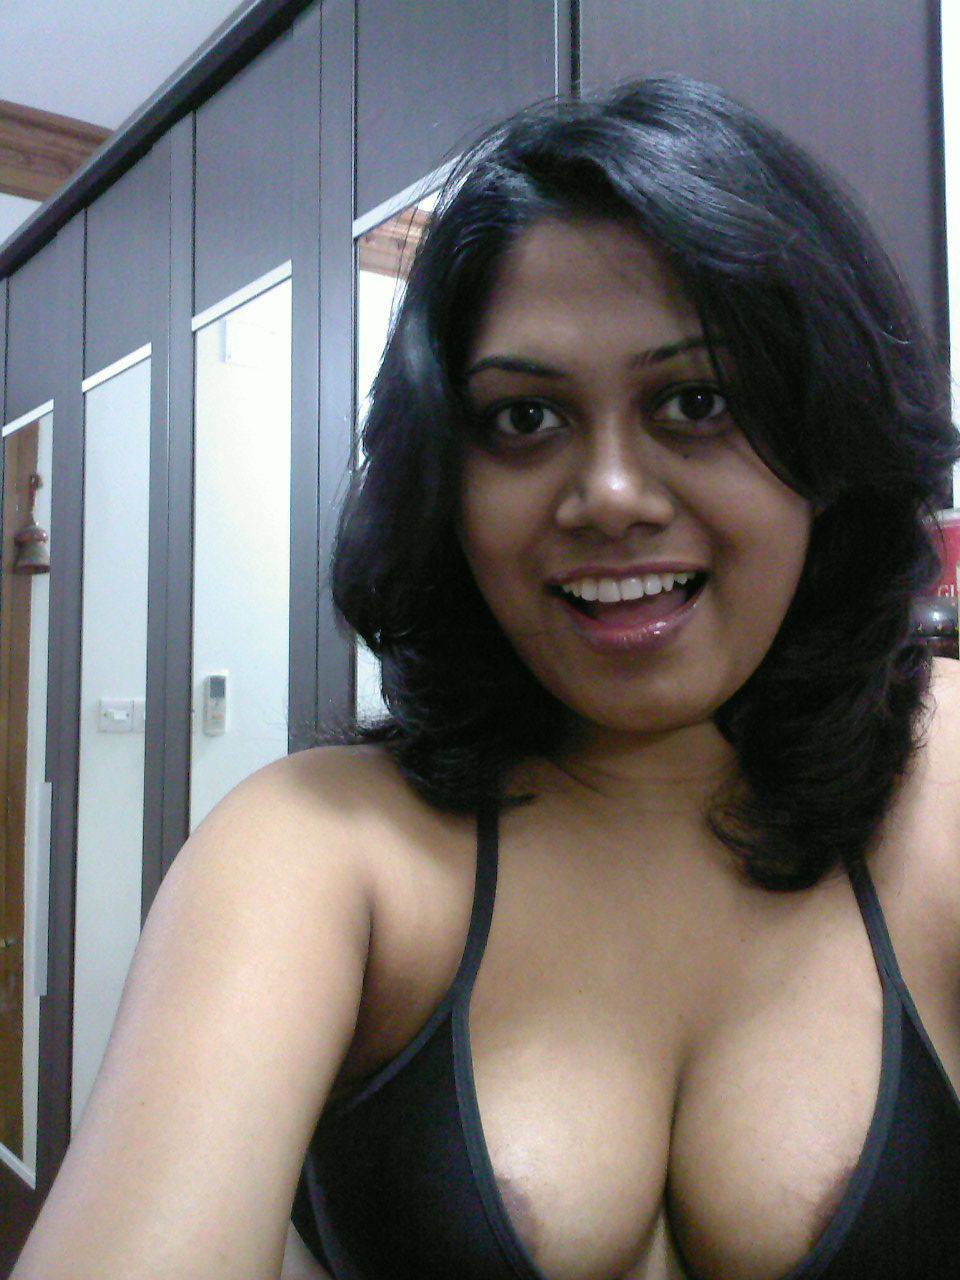 mordendotilcuore: Big Boobs Indian Aunty Selfshot - Desi ...